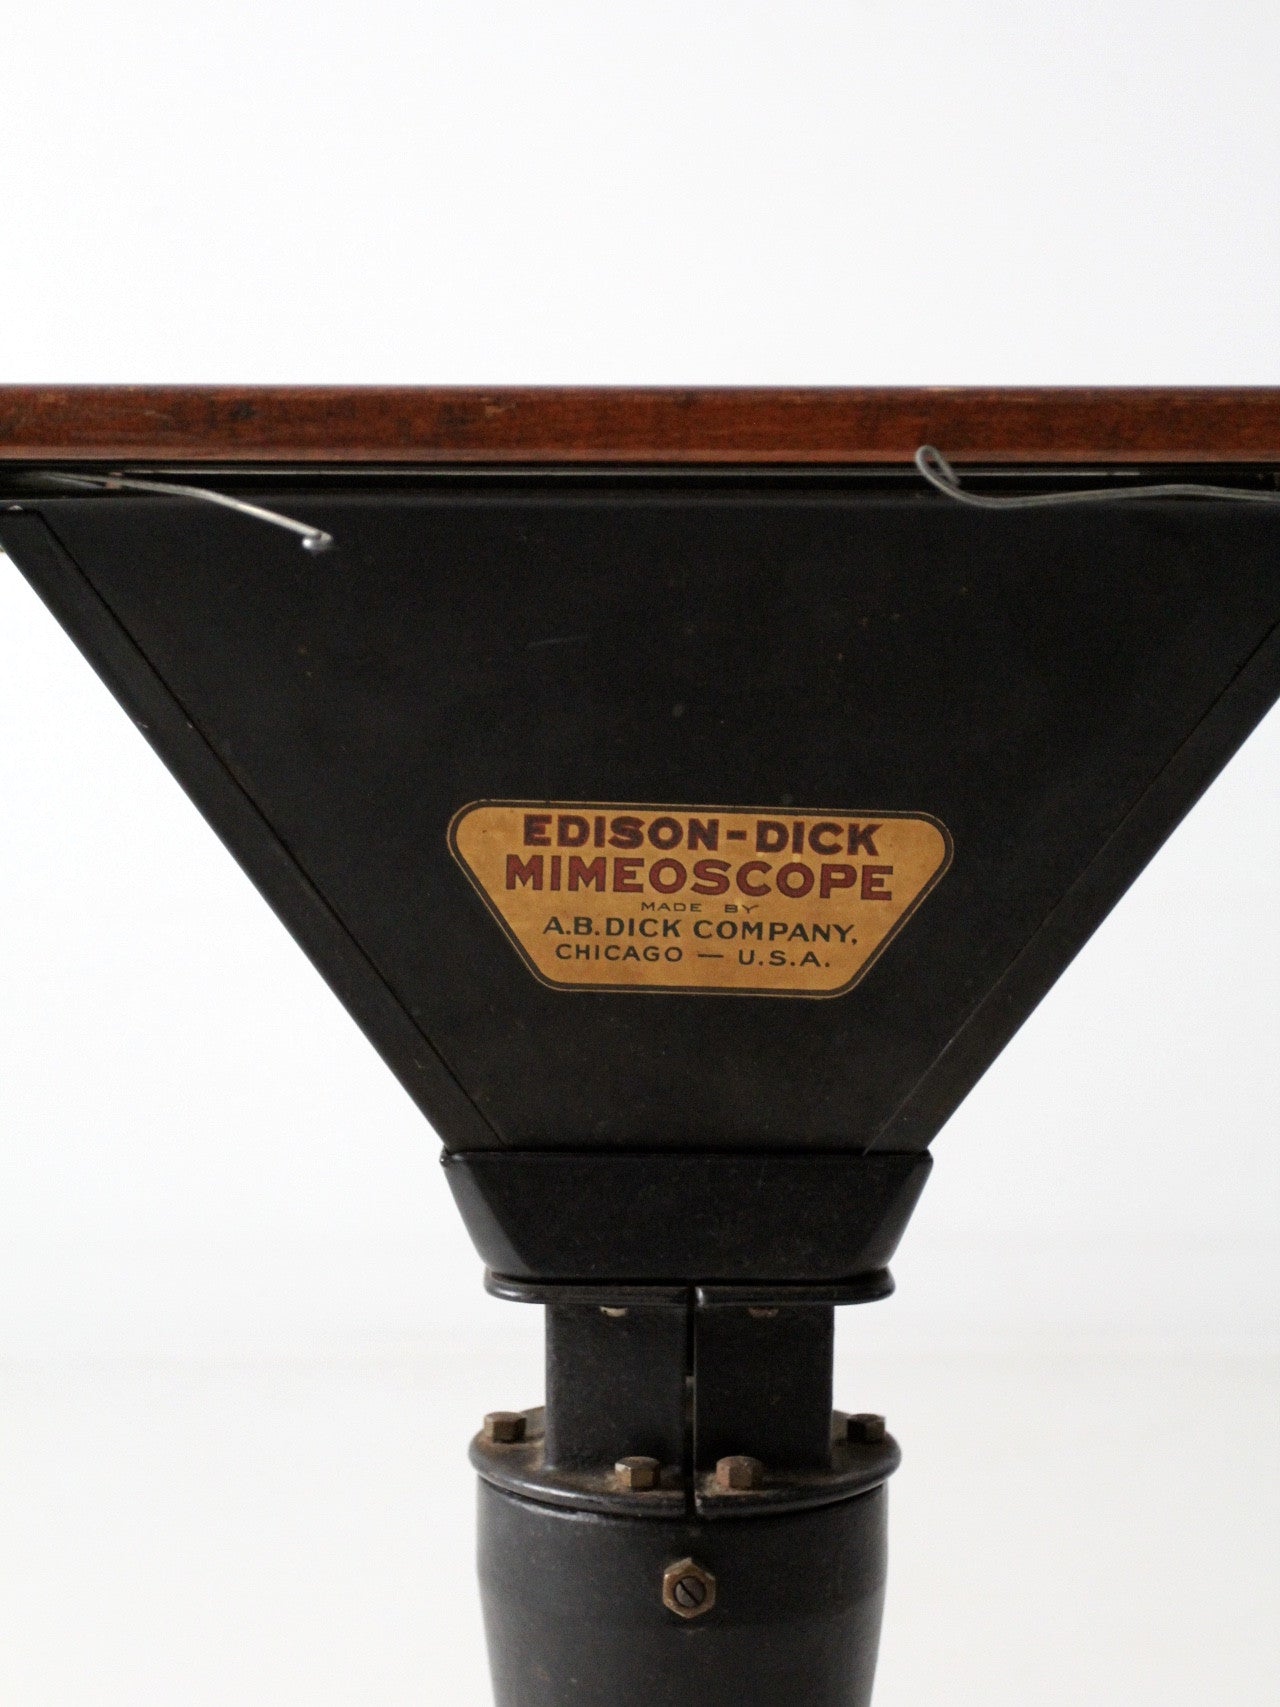 Edison-Dick mimeoscope circa 1915